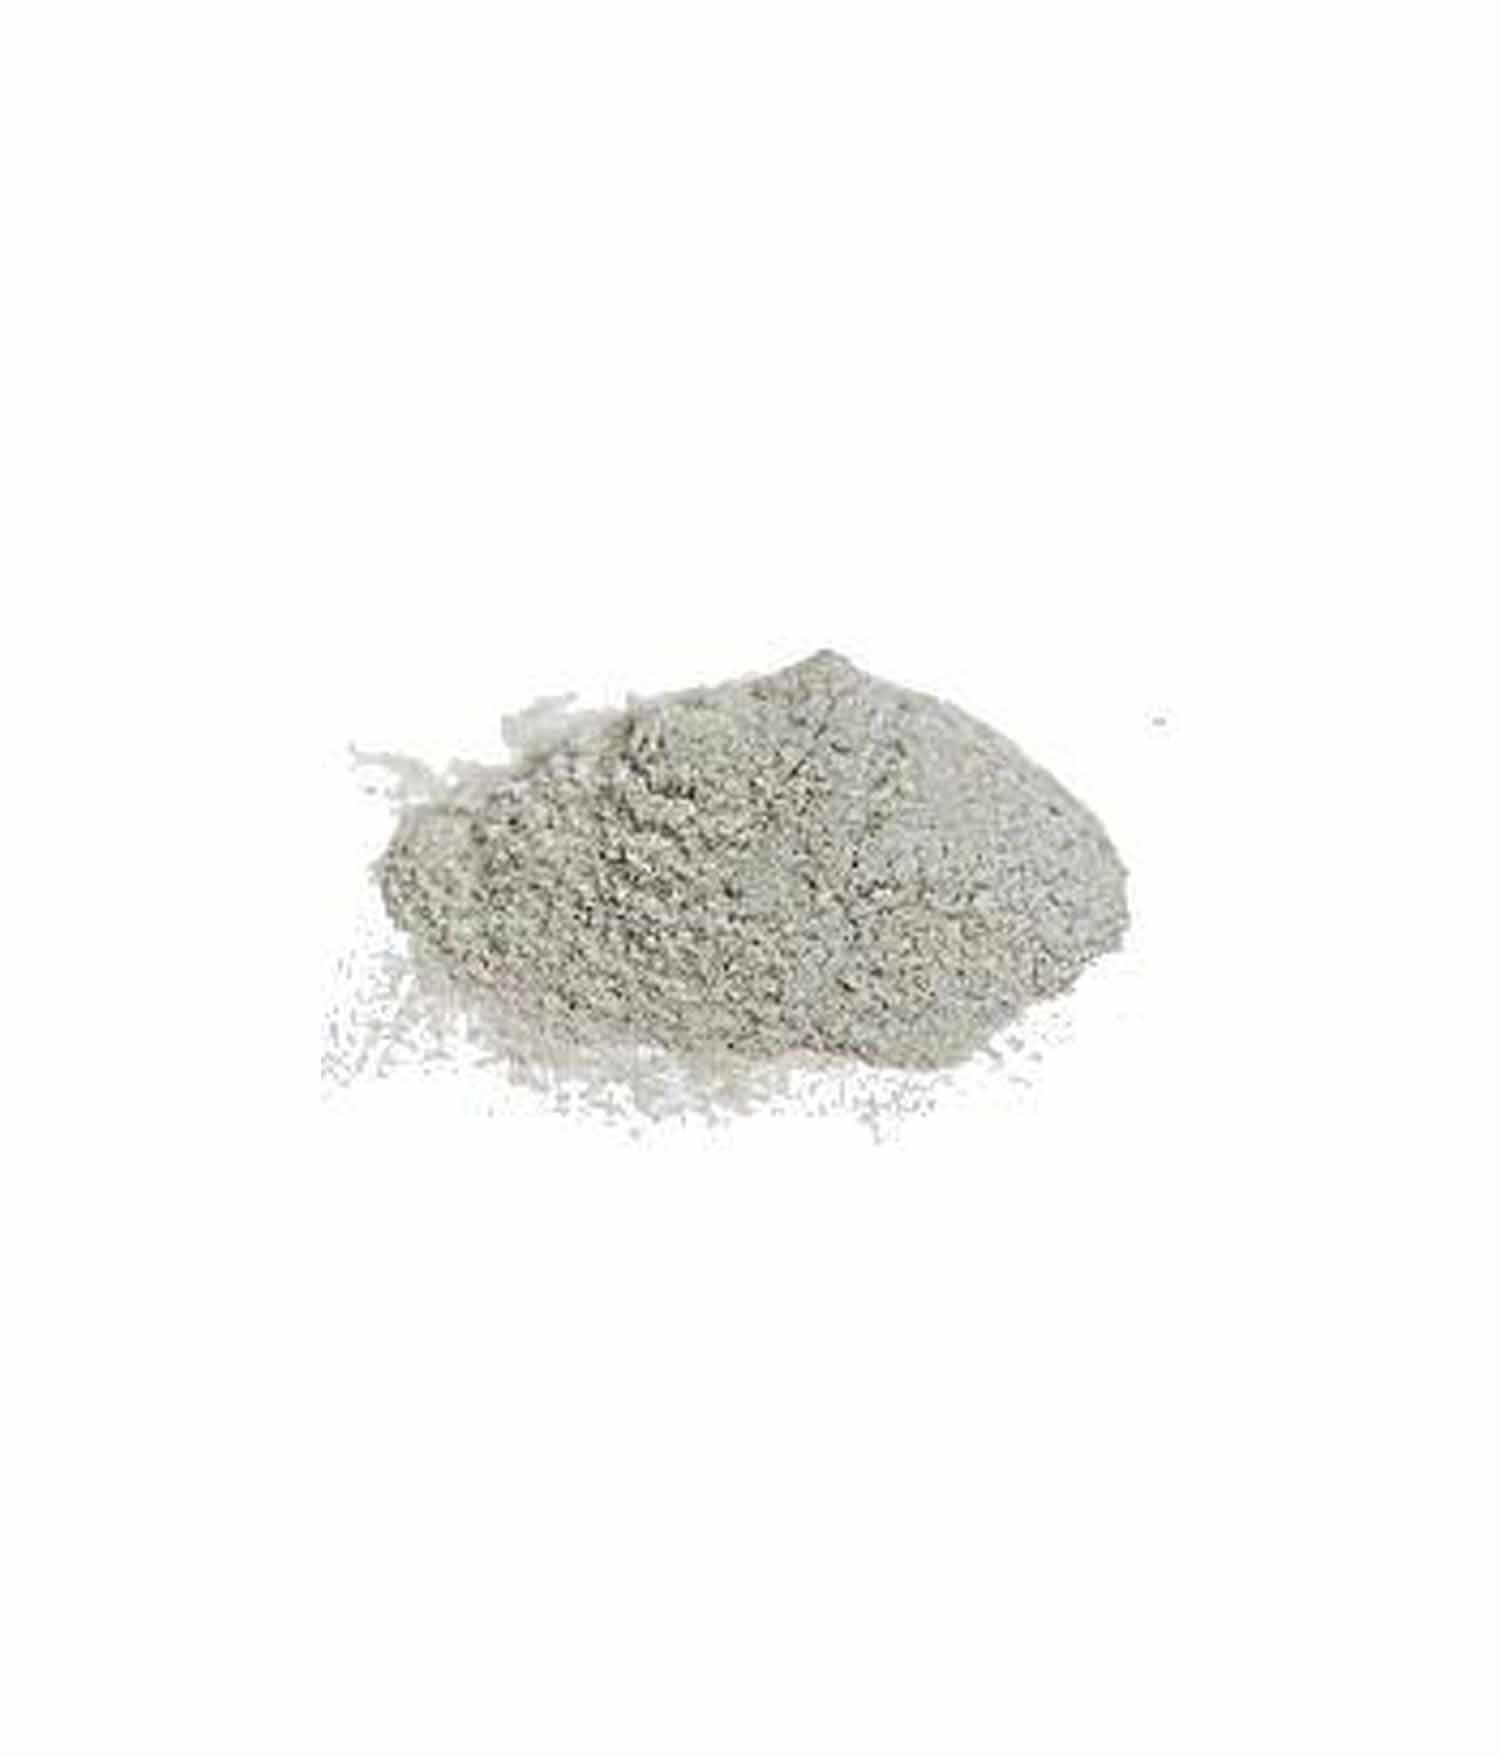 MB Stone Pumice Powder - 1 LB - Stone Doctor Australia - Engineered Stone > Pumice > Powder